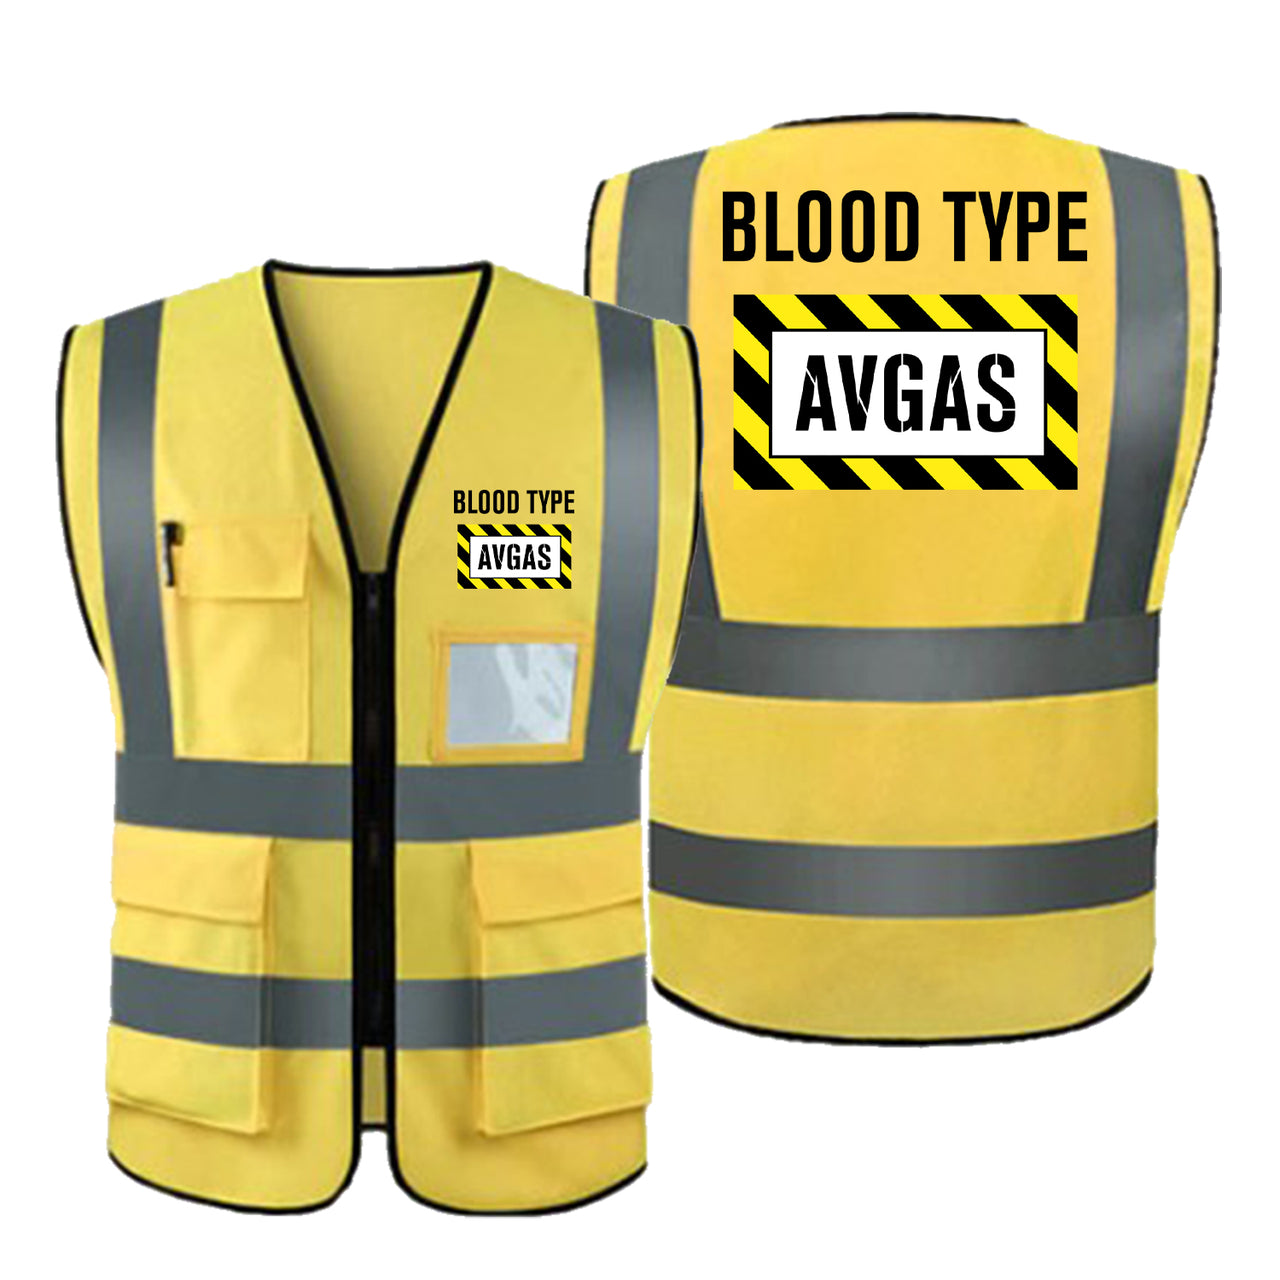 Blood Type AVGAS Designed Reflective Vests